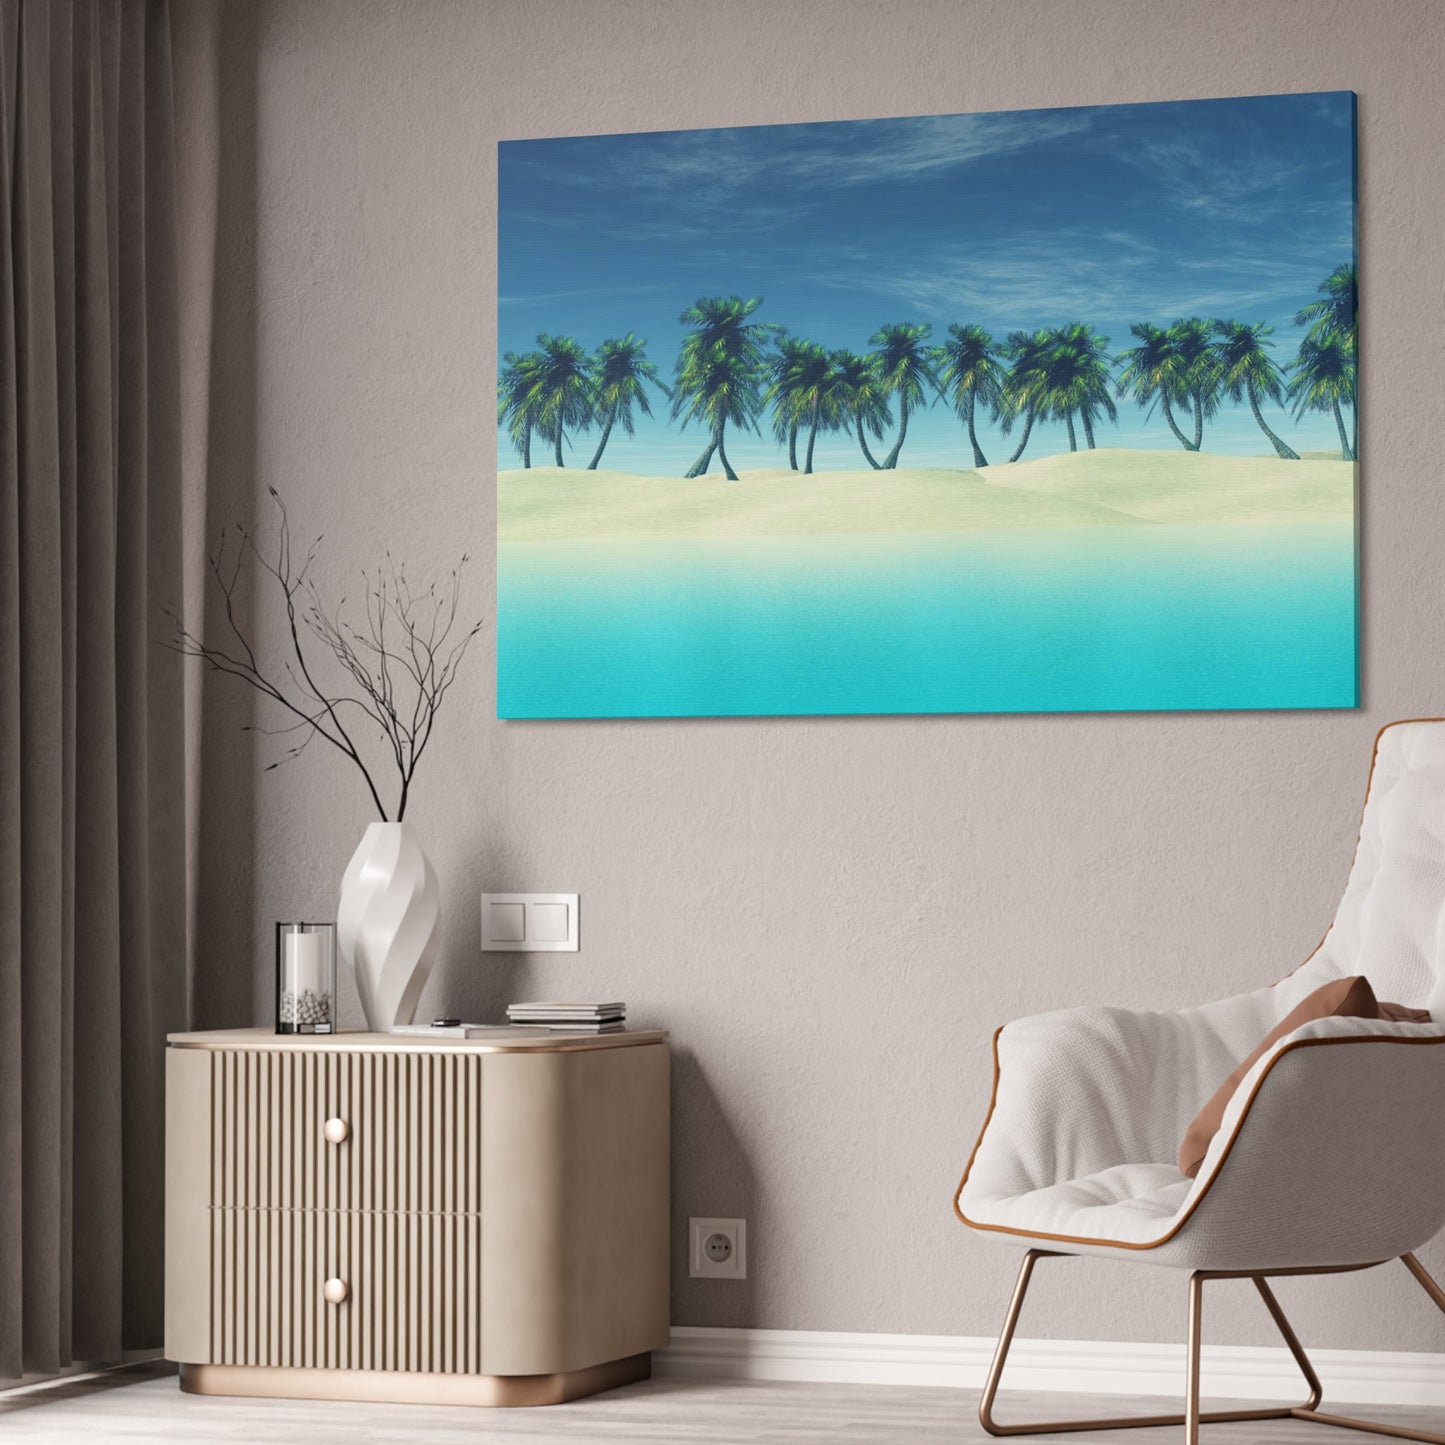 Seashore Serenity: Natural Canvas Art of a Calm Island Beach